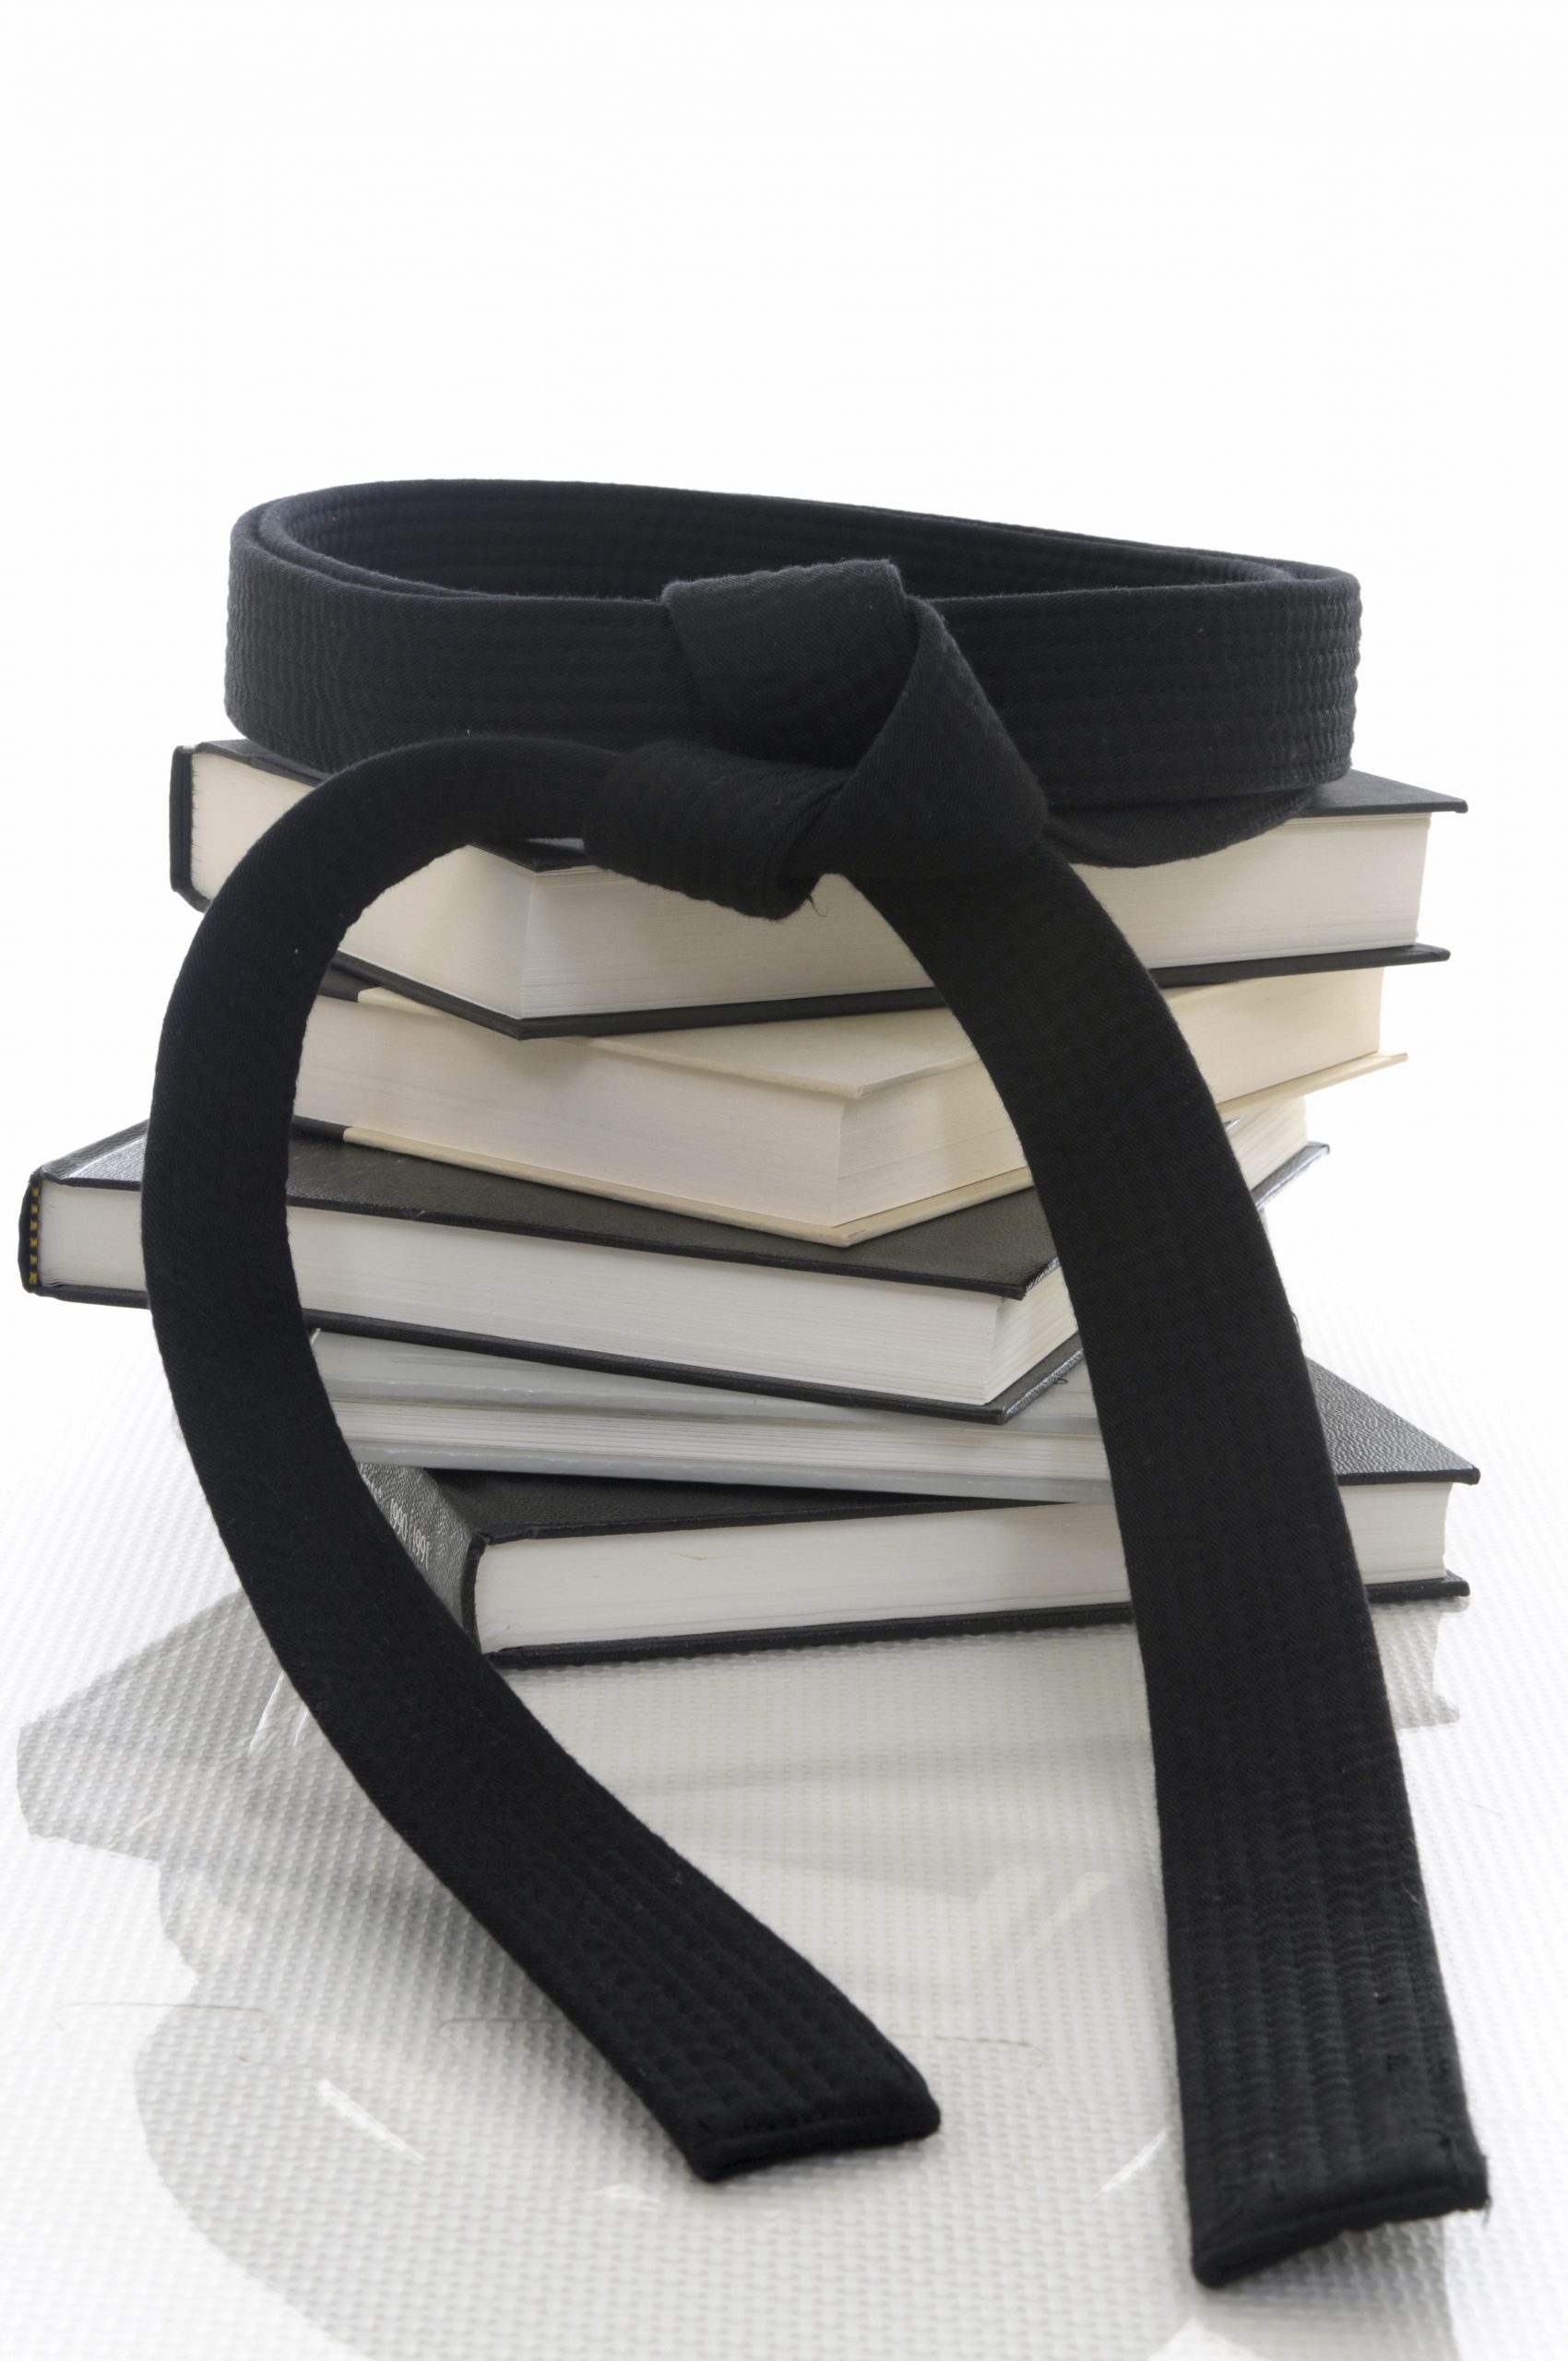 Six Sigma Master Black Belt Training | Lean Six Sigma